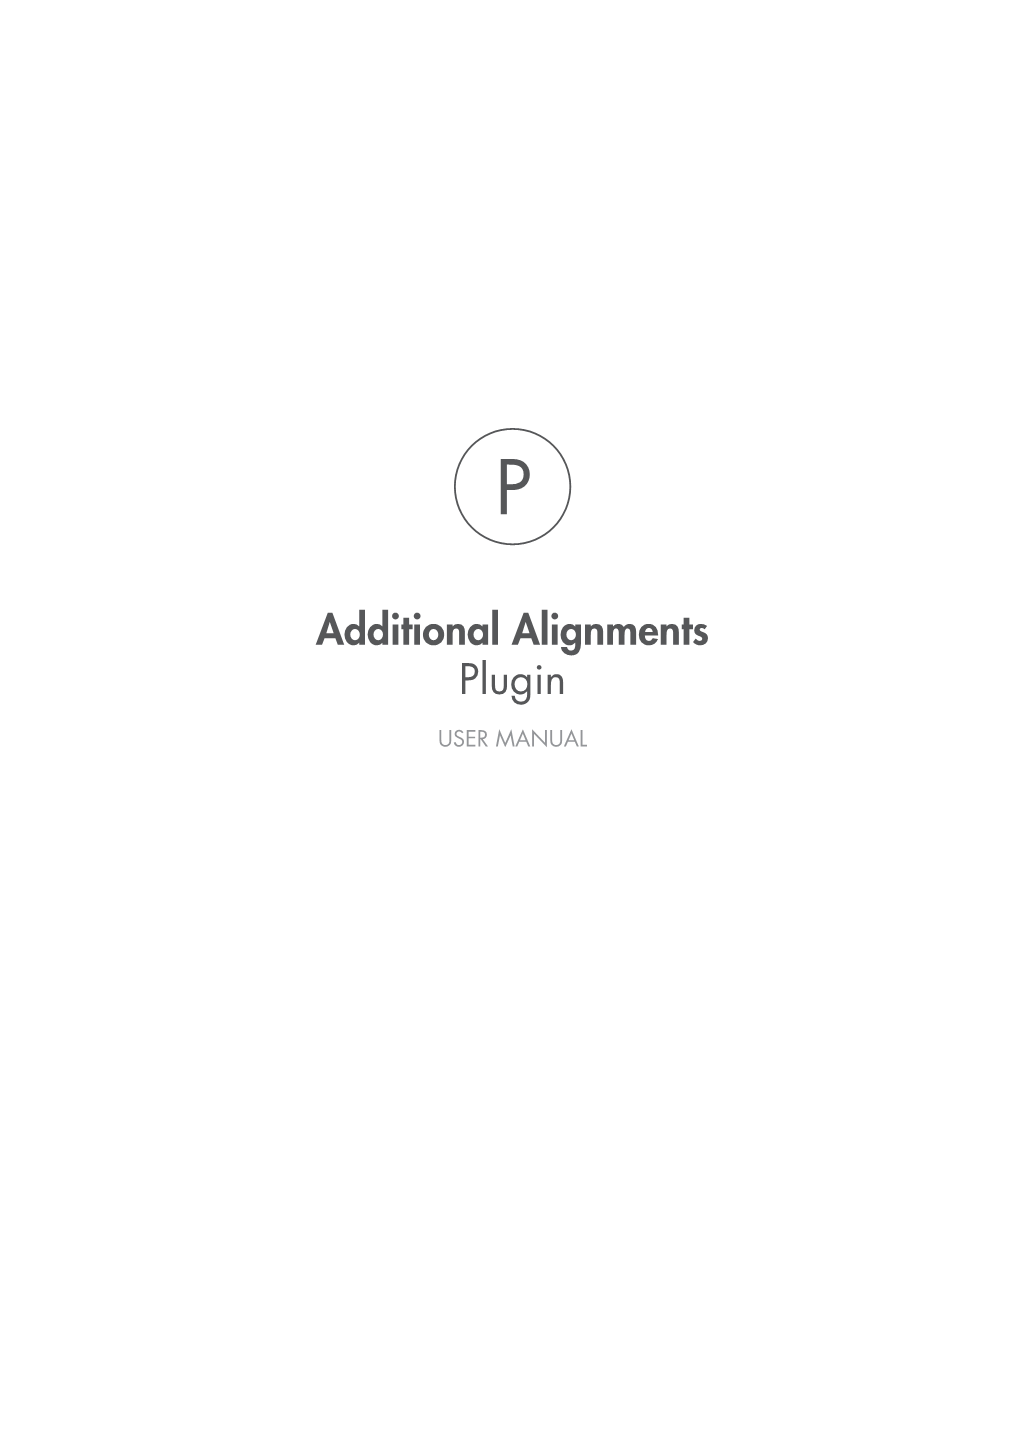 Additional Alignments Plugin